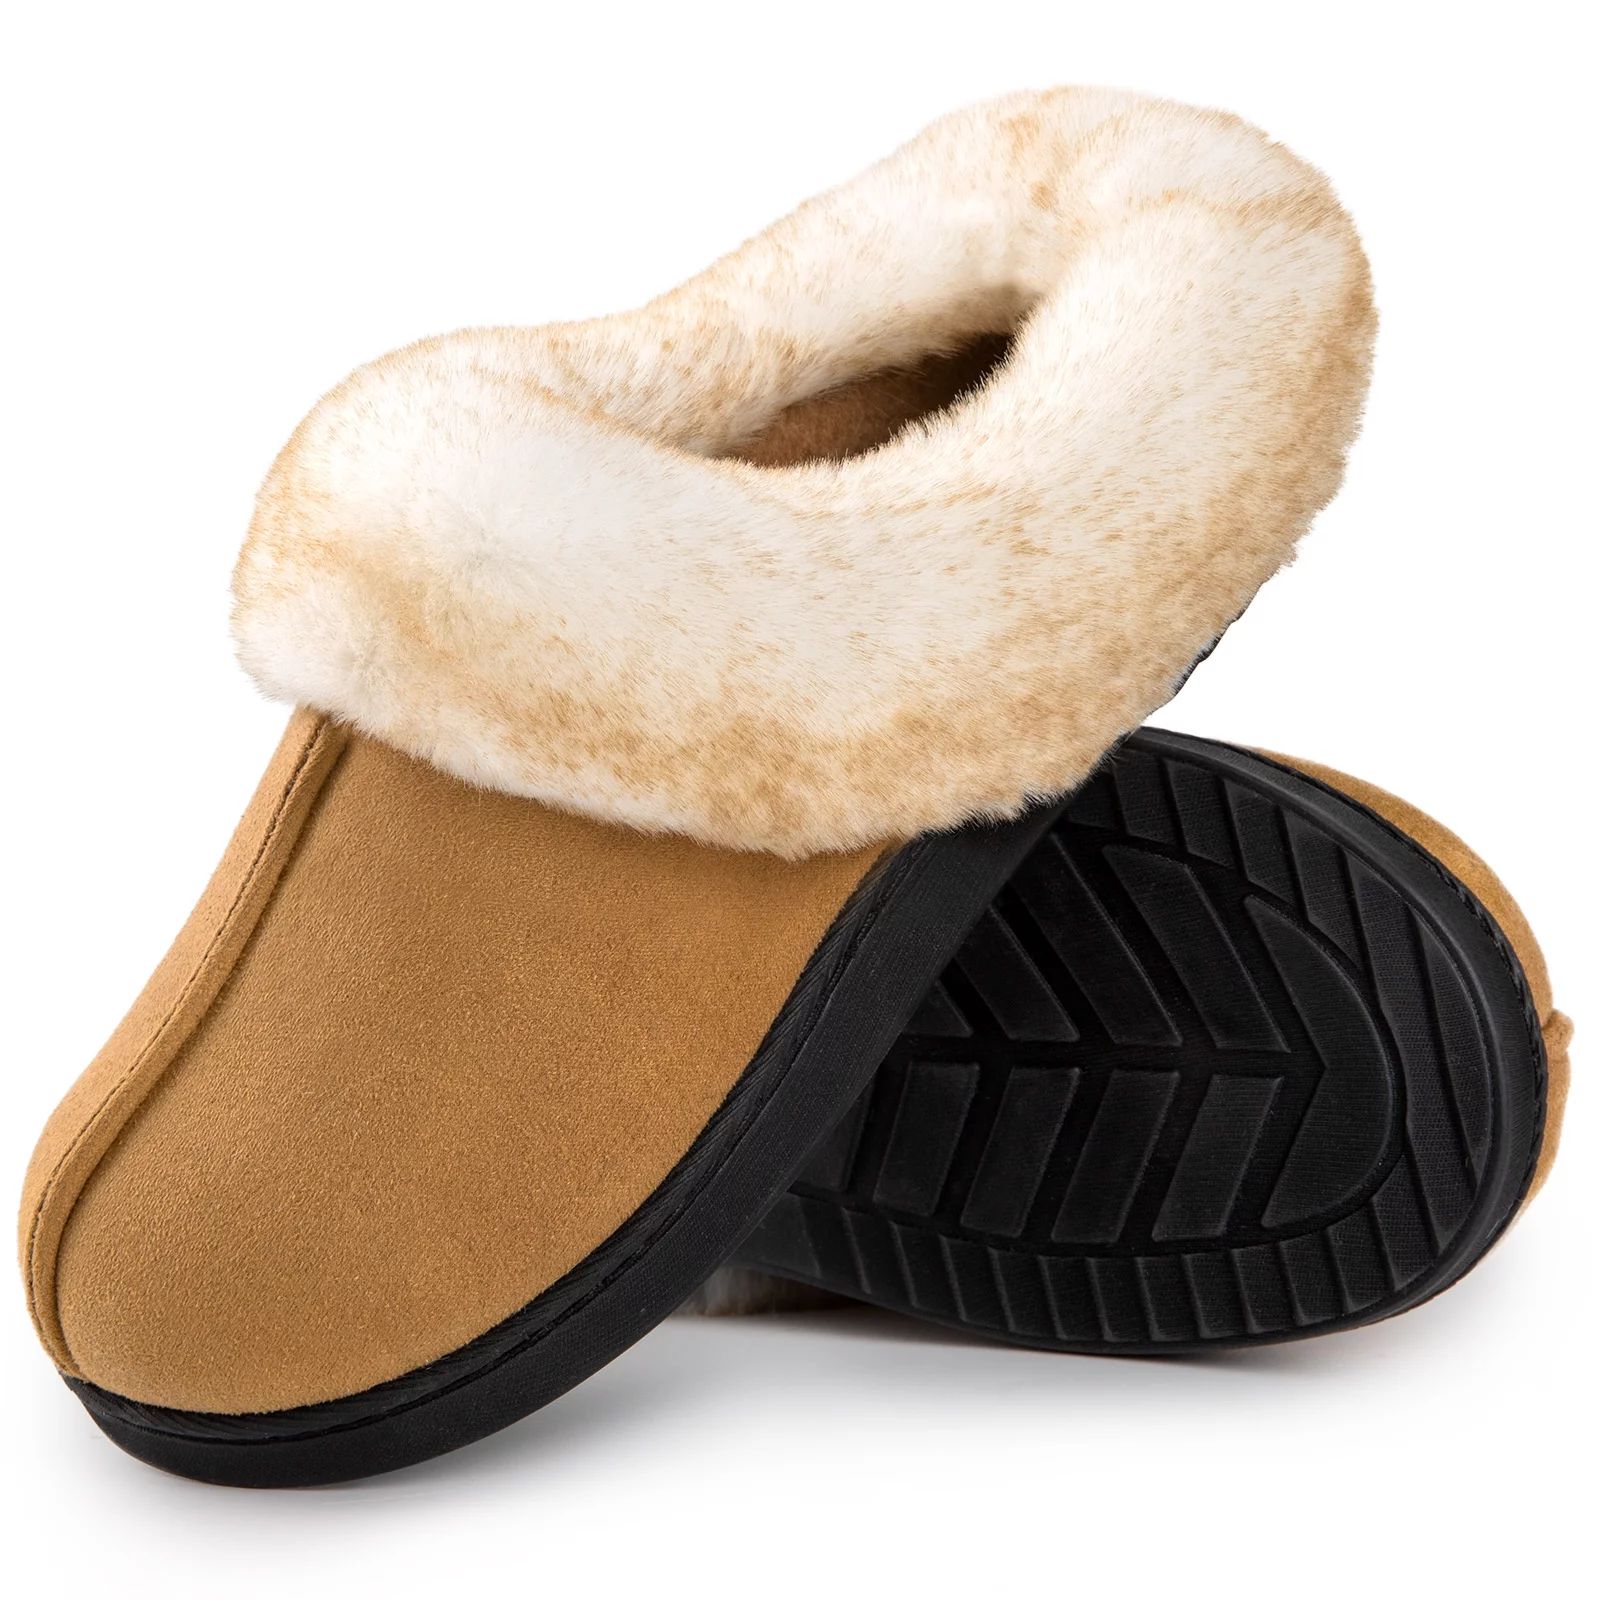 HomeTop Women's Classic Suede Memory Foam Slippers Durable Sole with Warm Faux Fur Collar - Walma... | Walmart (US)